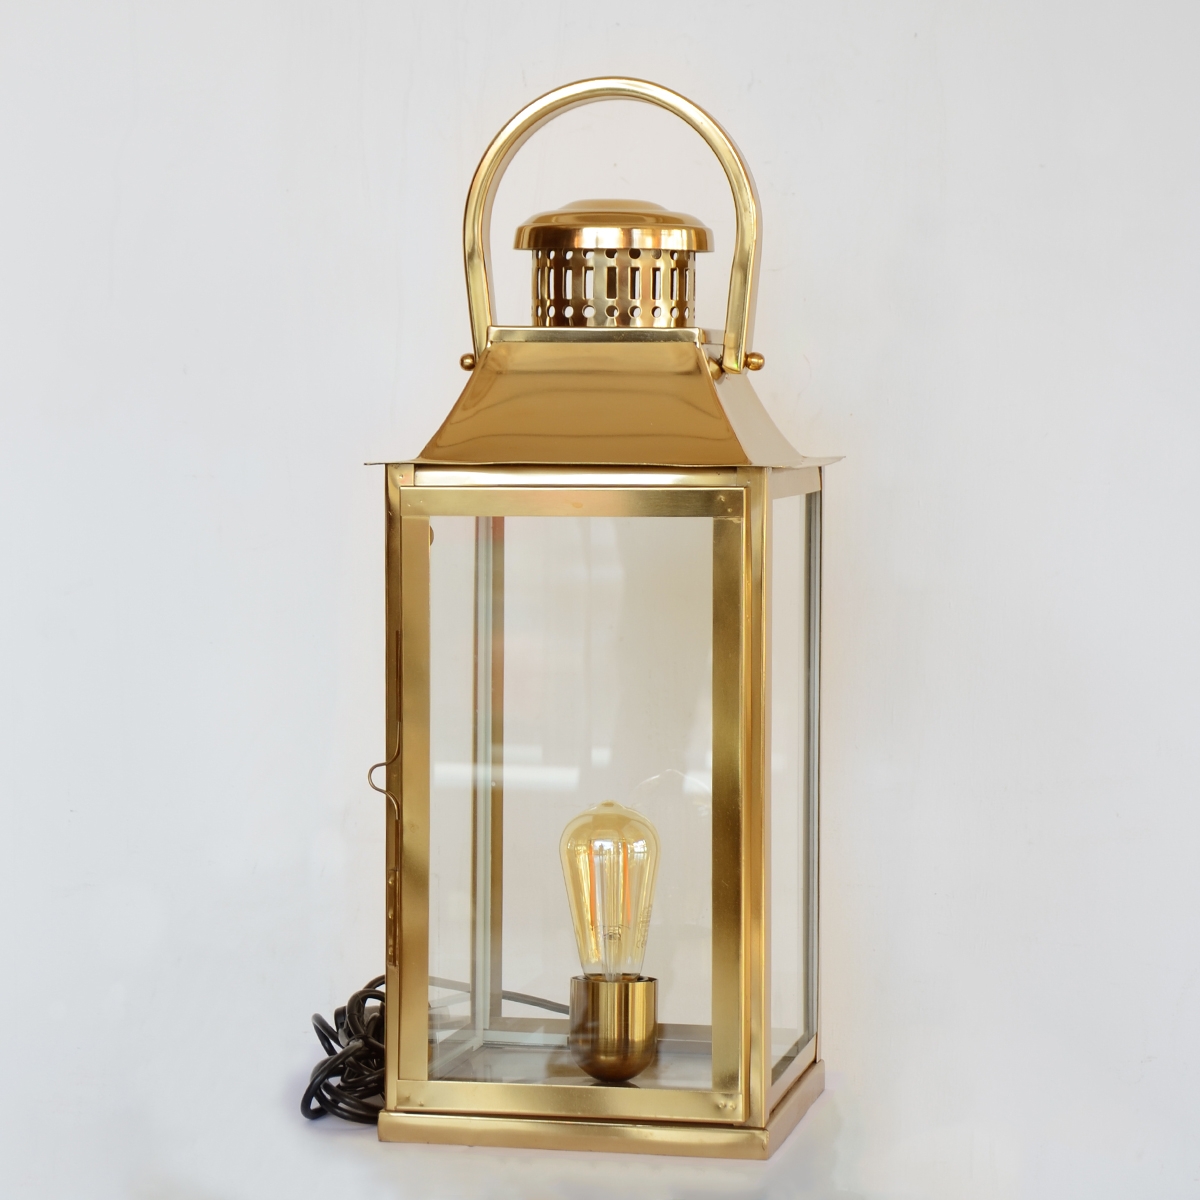 Handmade Stainless Steel Lantern 149349 Small - Gold